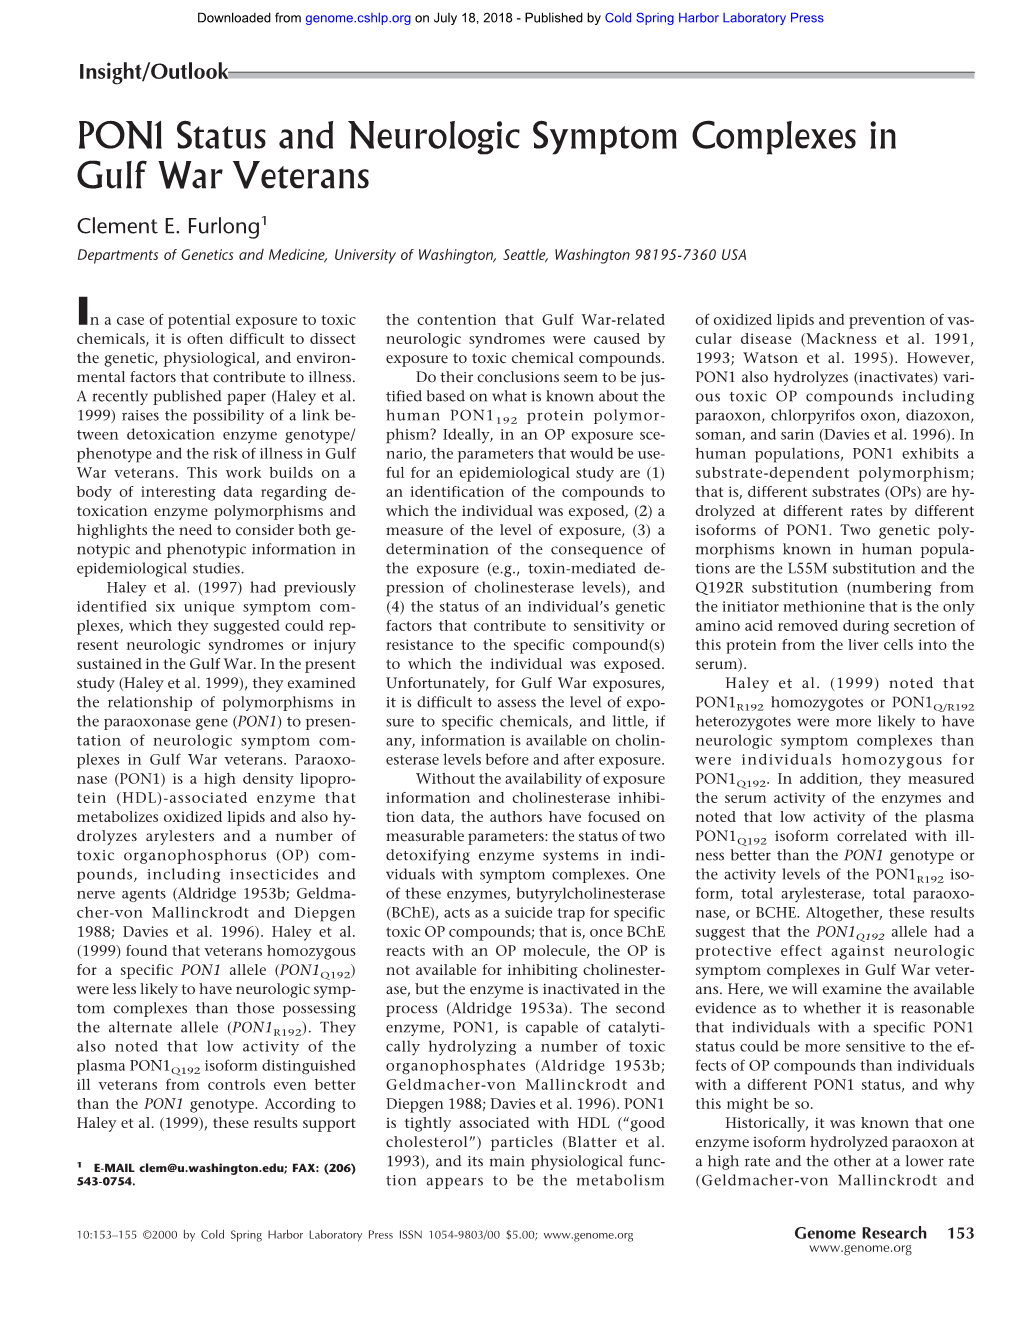 PON1 Status and Neurologic Symptom Complexes in Gulf War Veterans